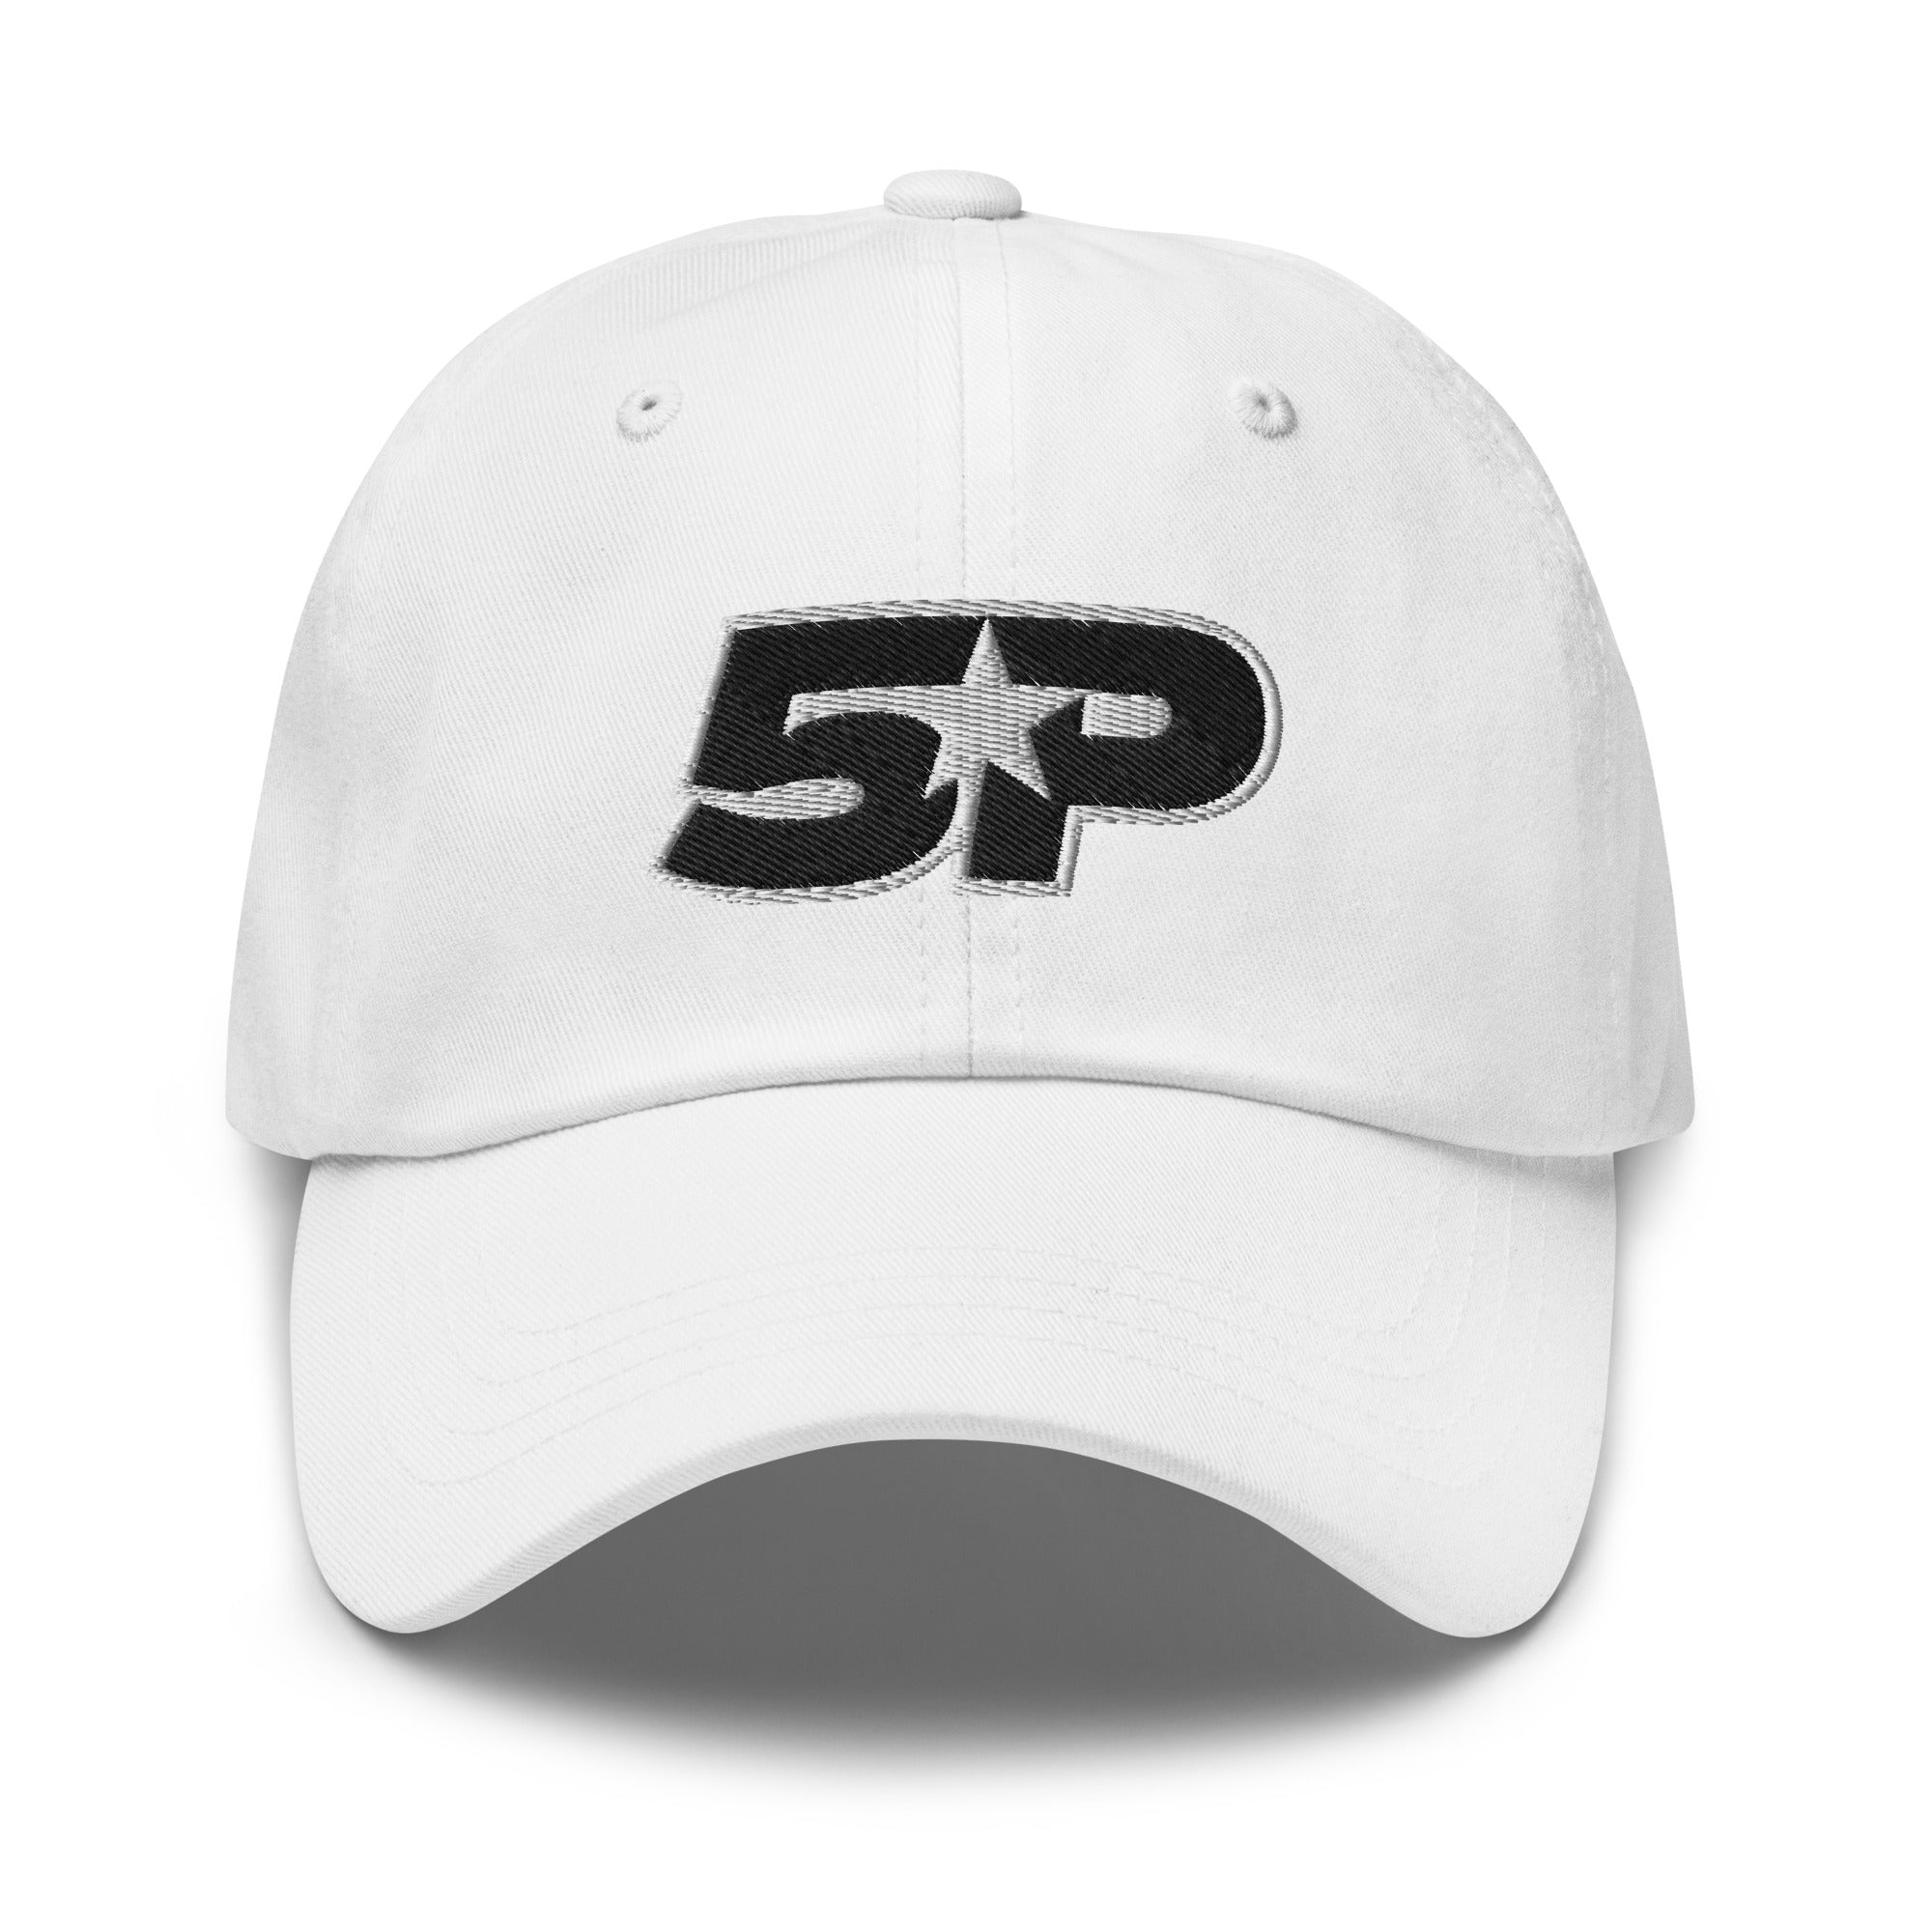 5P Dad hat